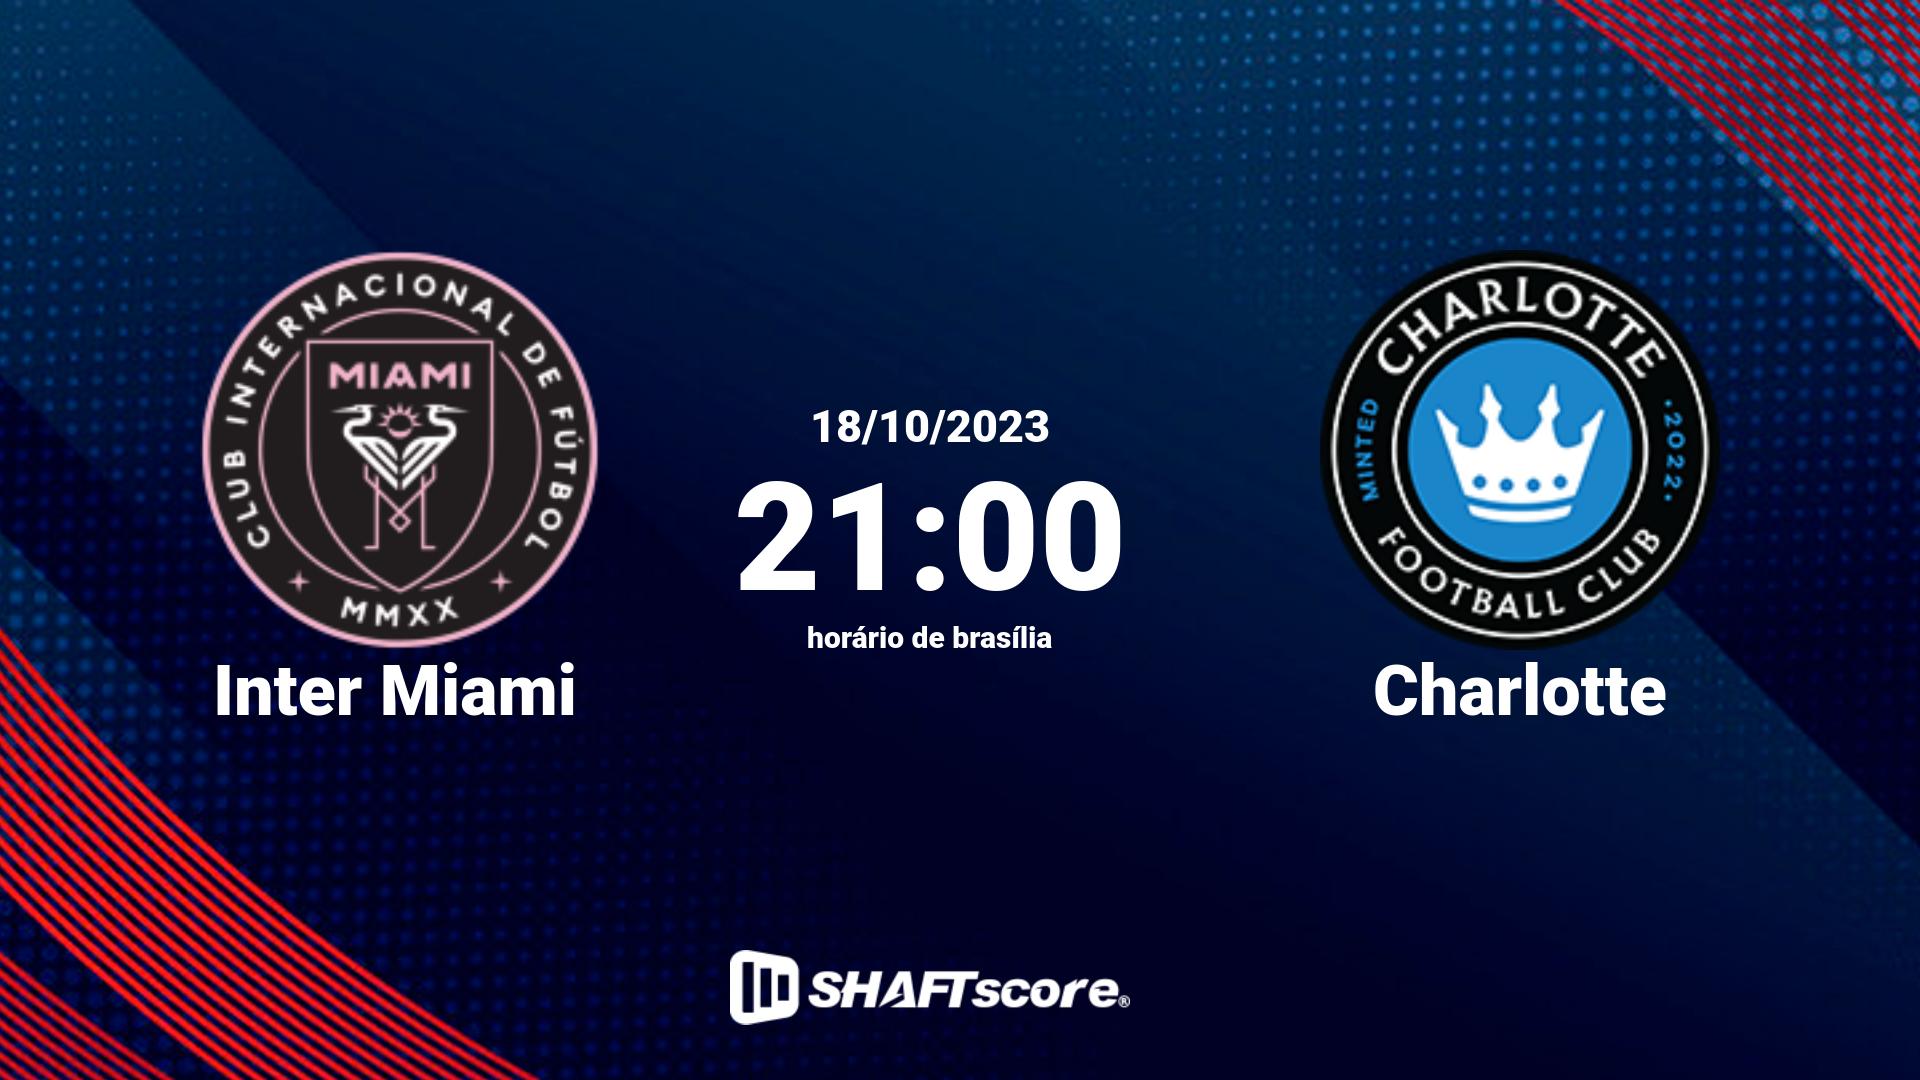 Estatísticas do jogo Inter Miami vs Charlotte 18.10 21:00